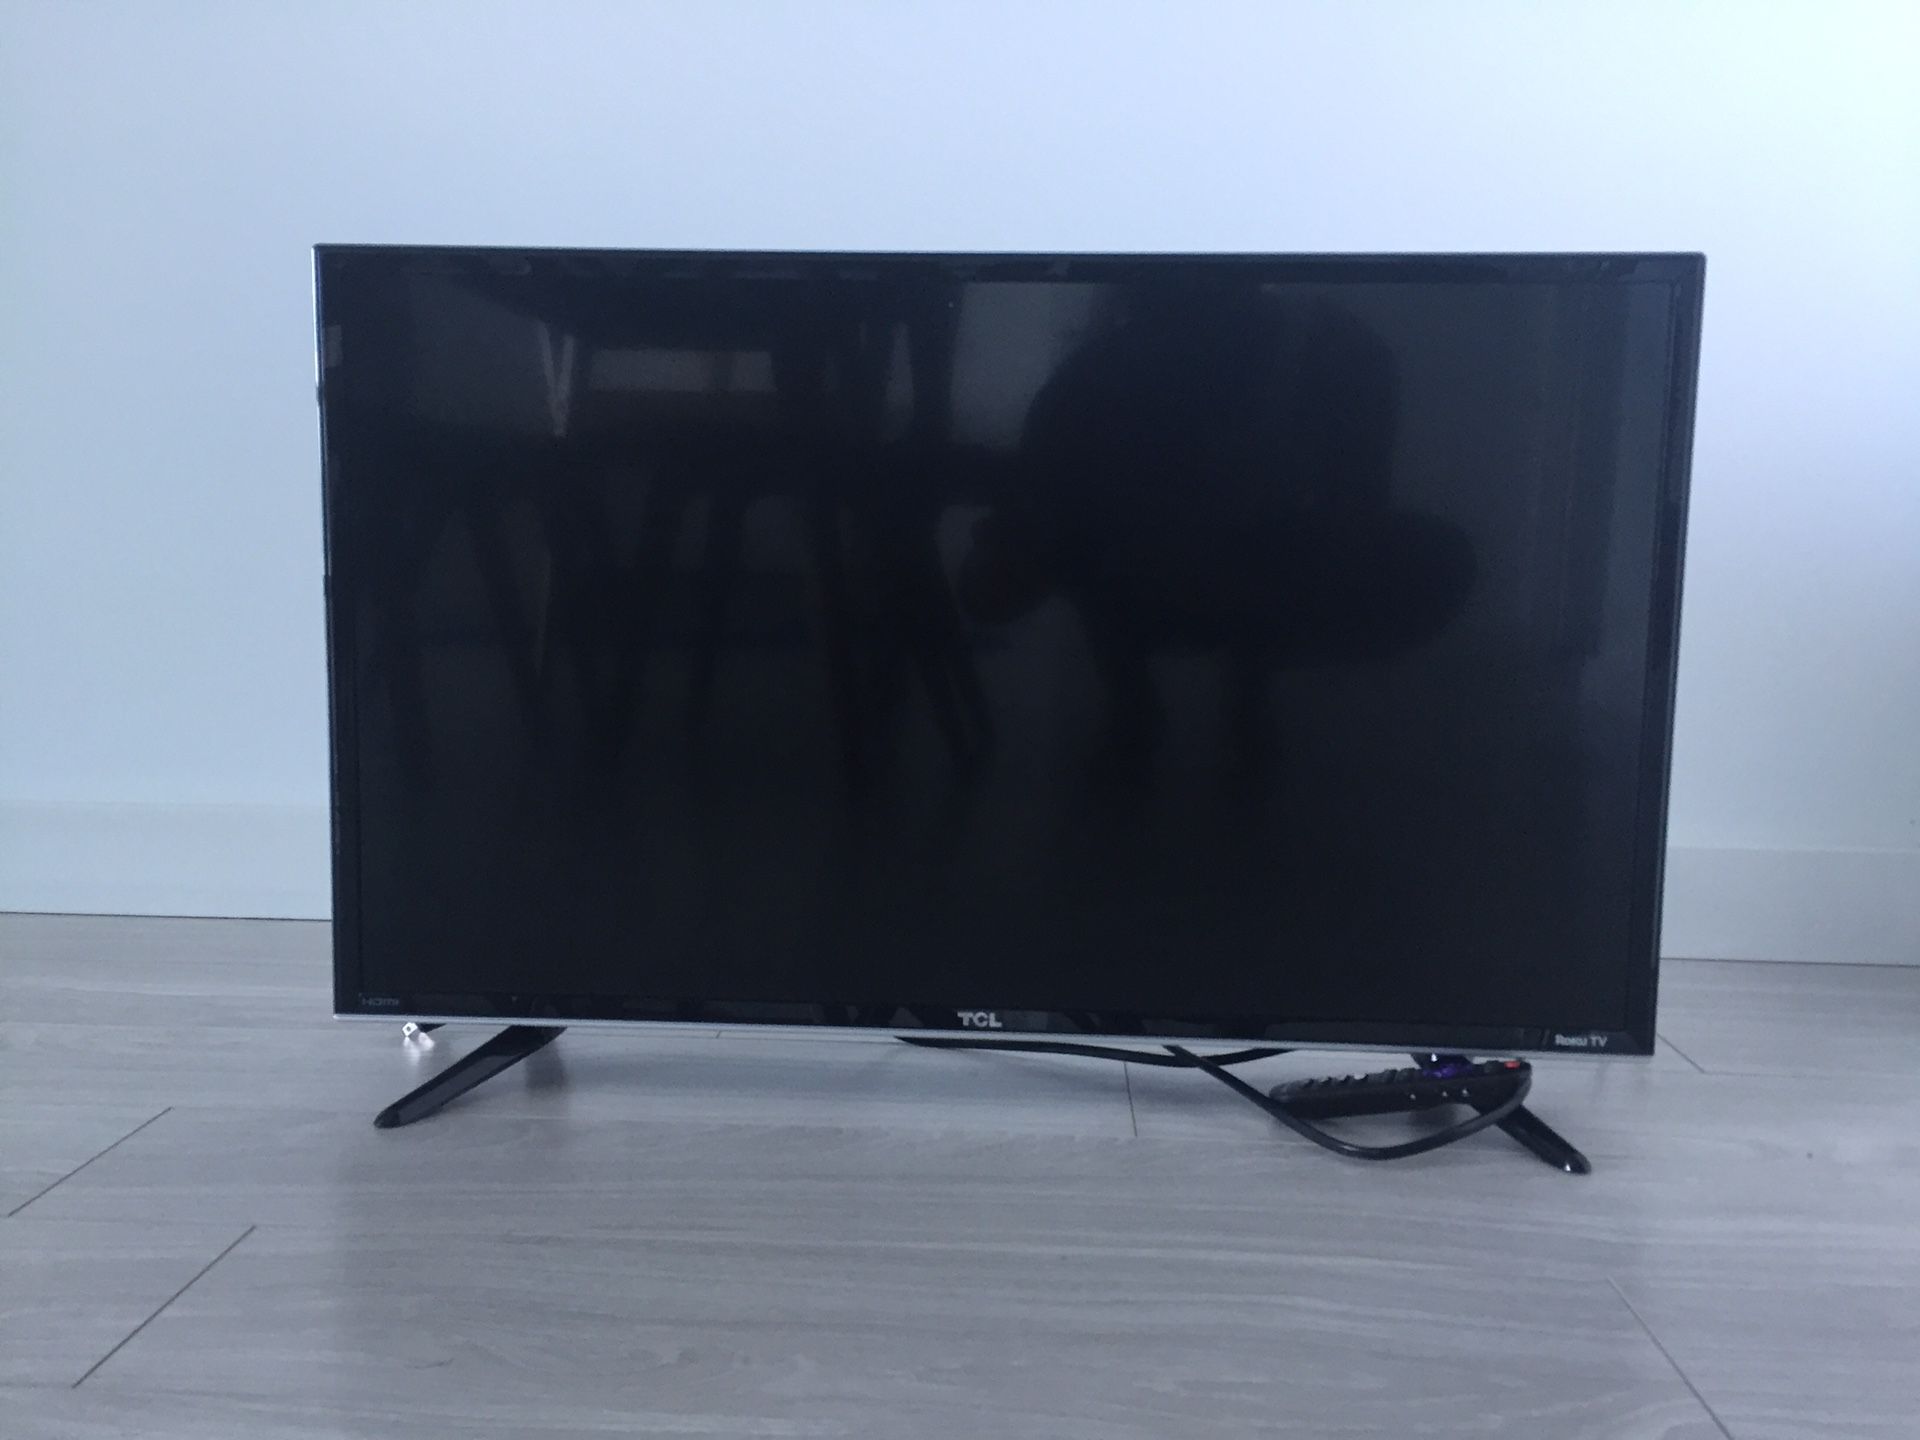 Roku Smart LED TV (TCL brand, 32-inch 720p, 2015 Model)